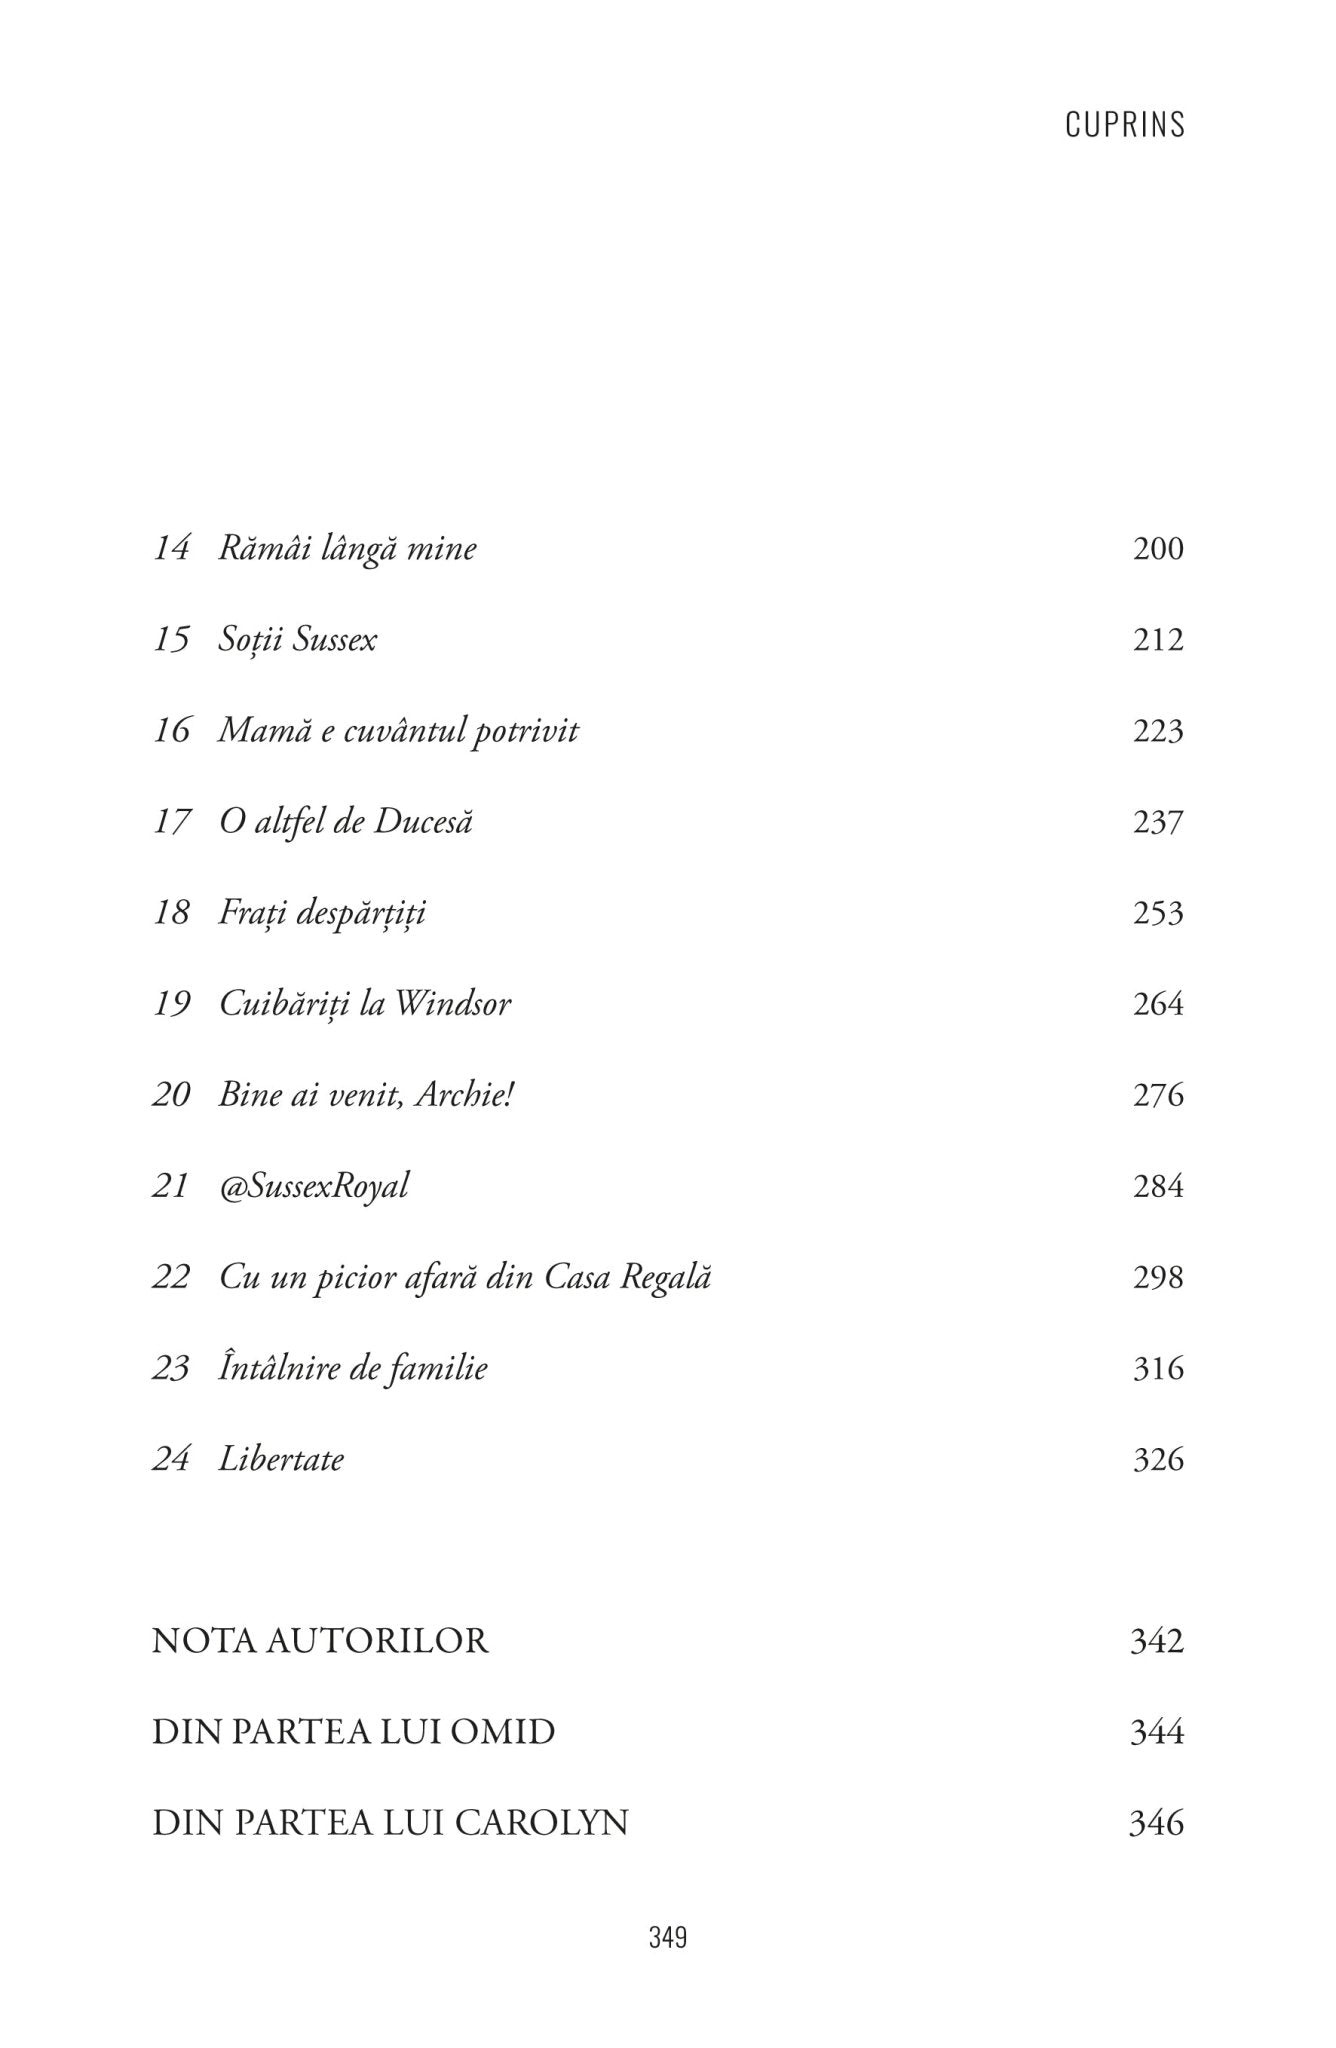 Harry & Meghan - Drumul spre libertate. Odiseea unei familii regale moderne, de Omid Scobie si Carolyn Durand - Ed. digitala - PDF - Publisol.ro